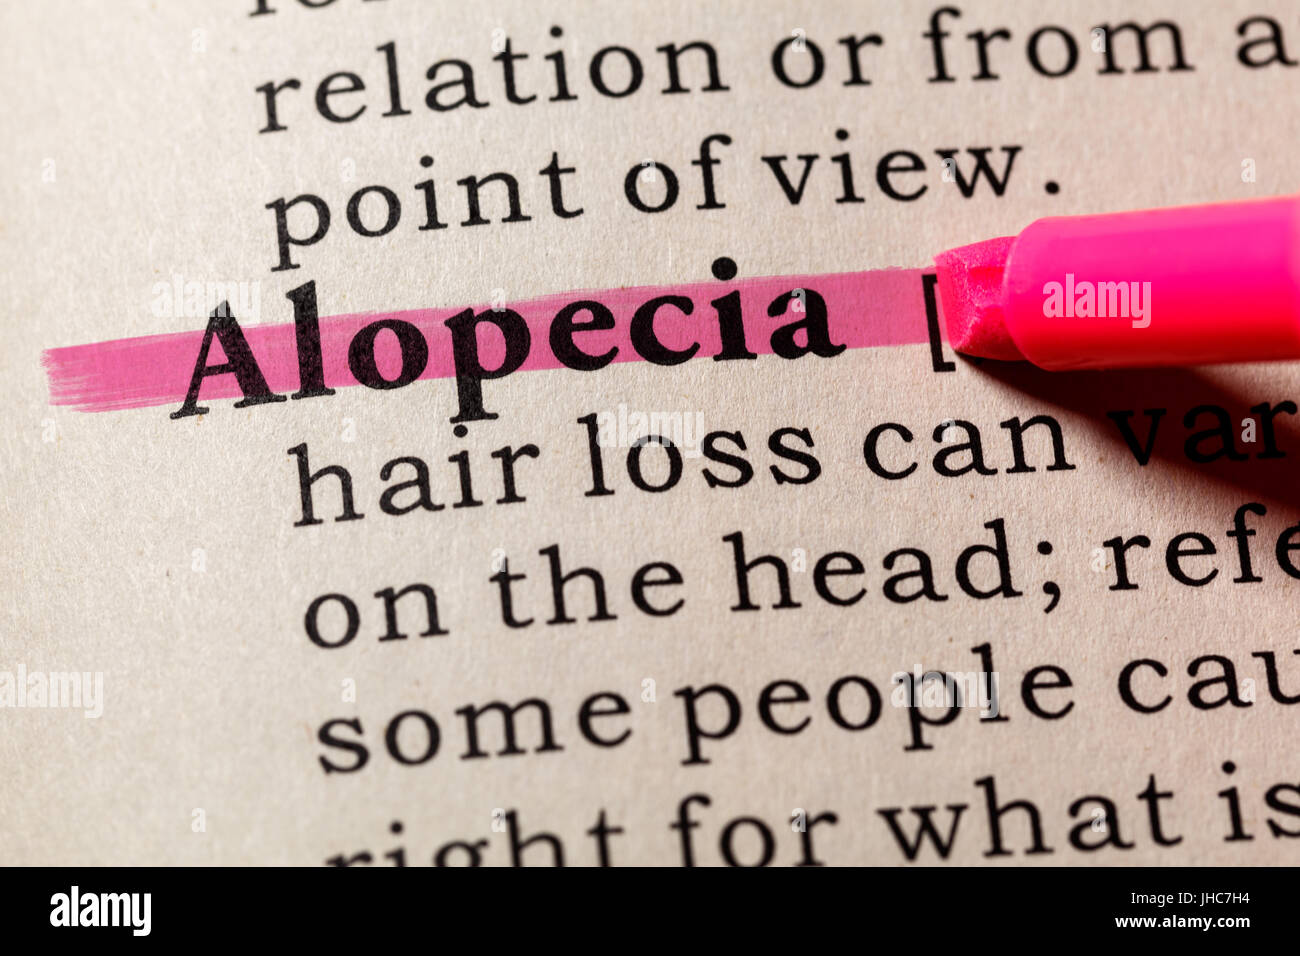 Fake Dictionary, Dictionary definition of the word Alopecia. including key descriptive words. Stock Photo